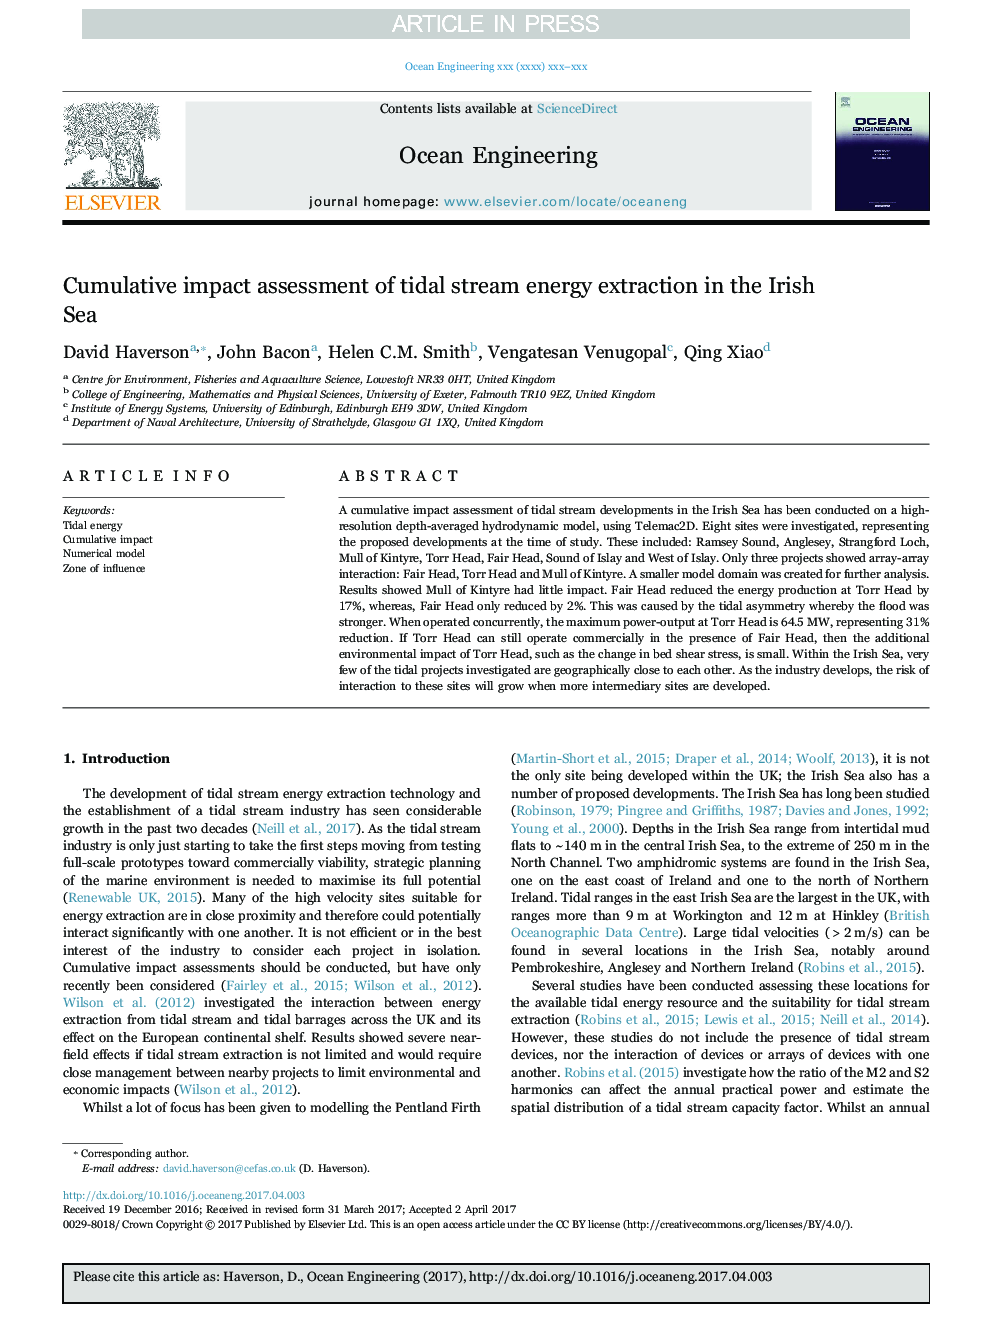 Cumulative impact assessment of tidal stream energy extraction in the Irish Sea